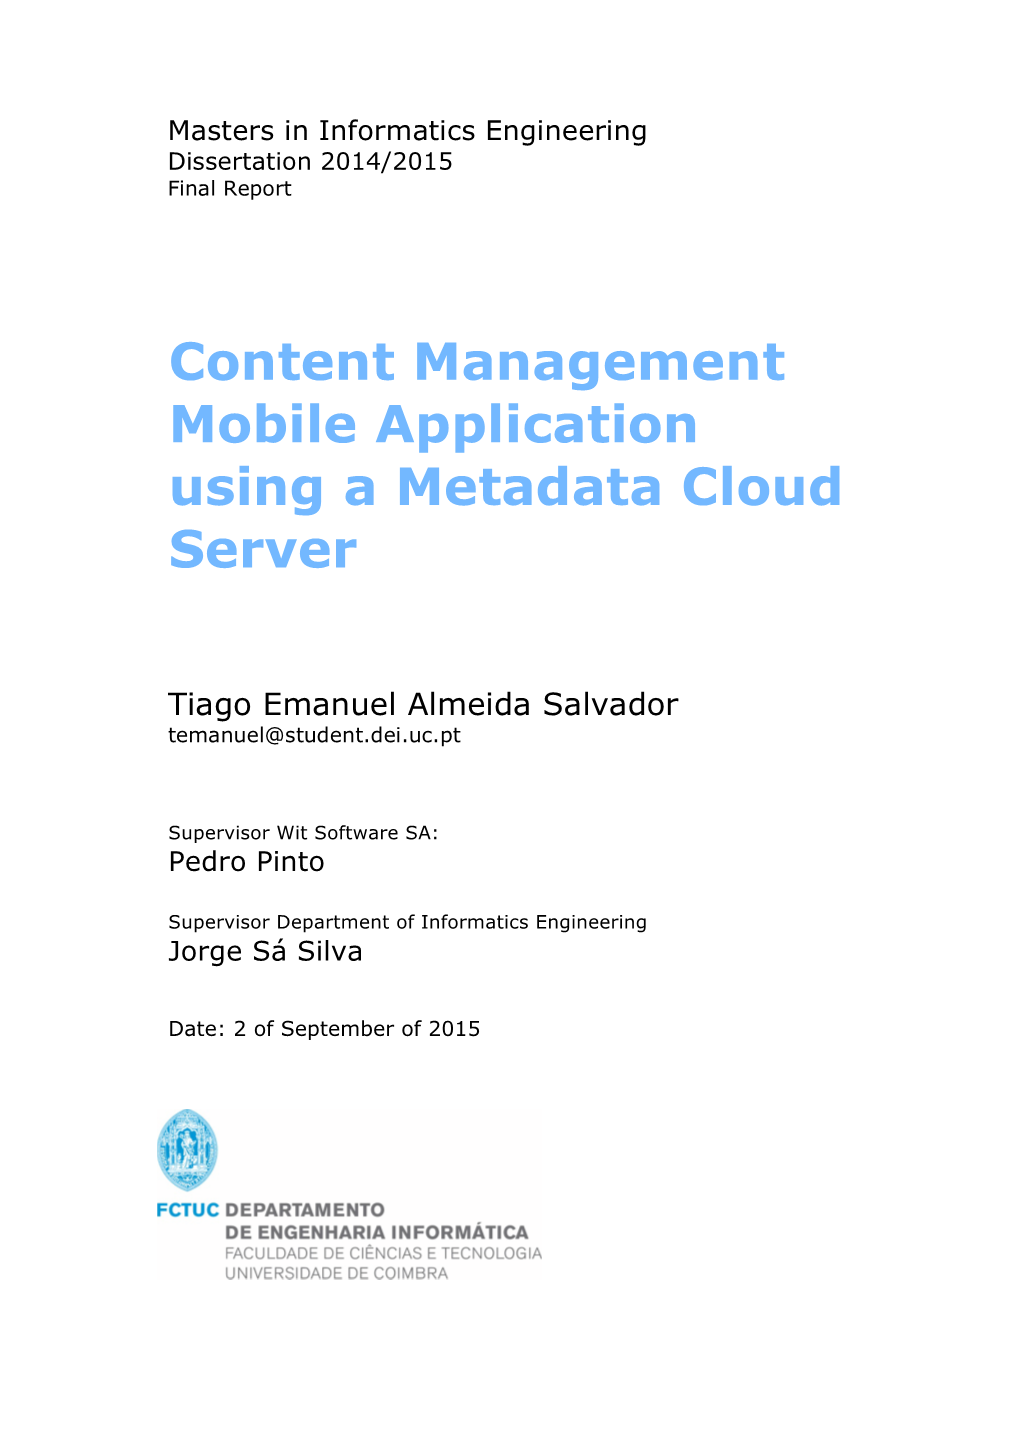 Content Management Mobile Application Using a Metadata Cloud